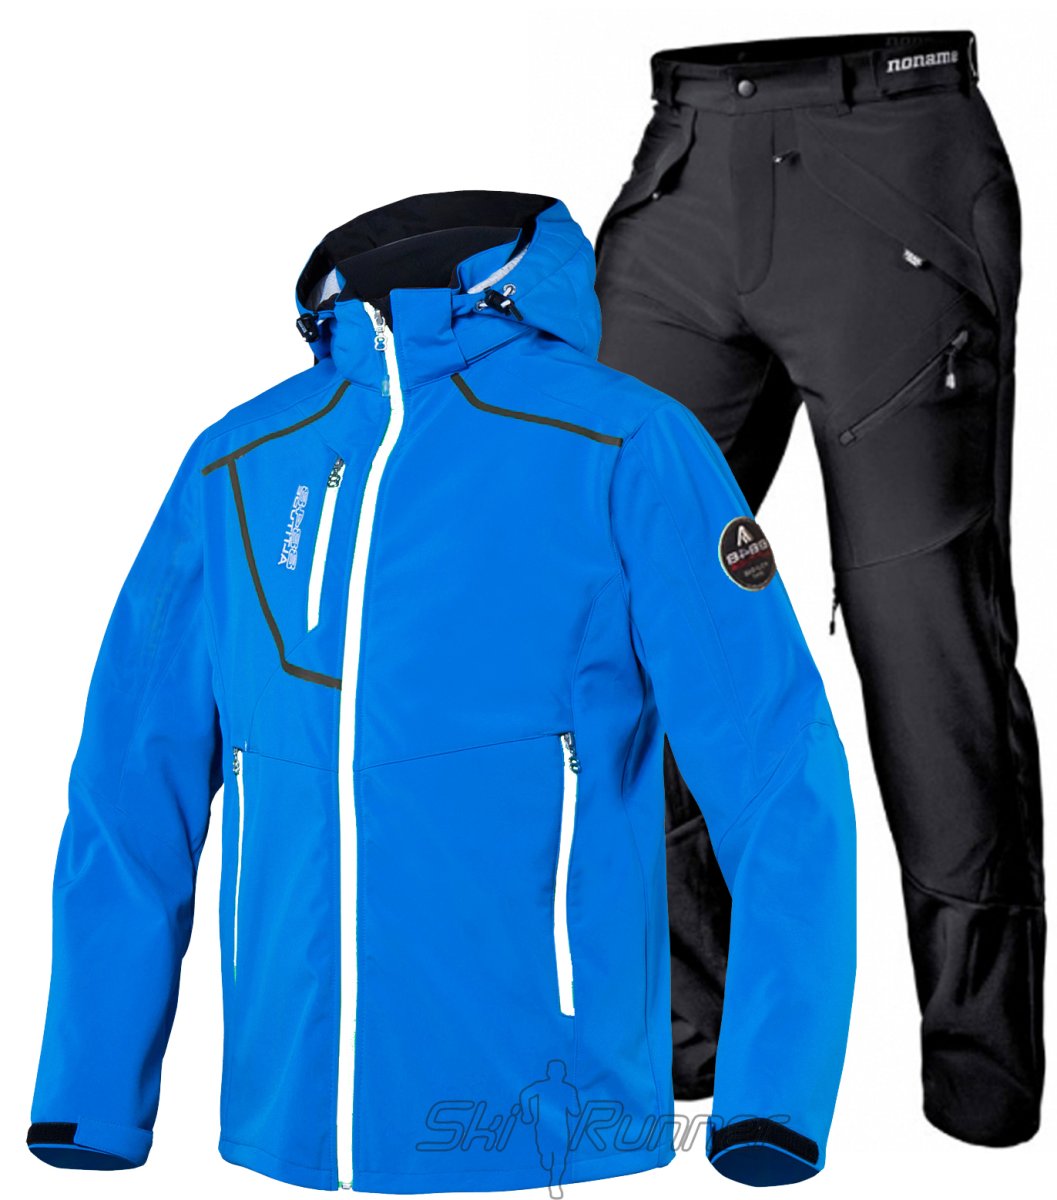 Зимняя спортивная одежда для мужчин